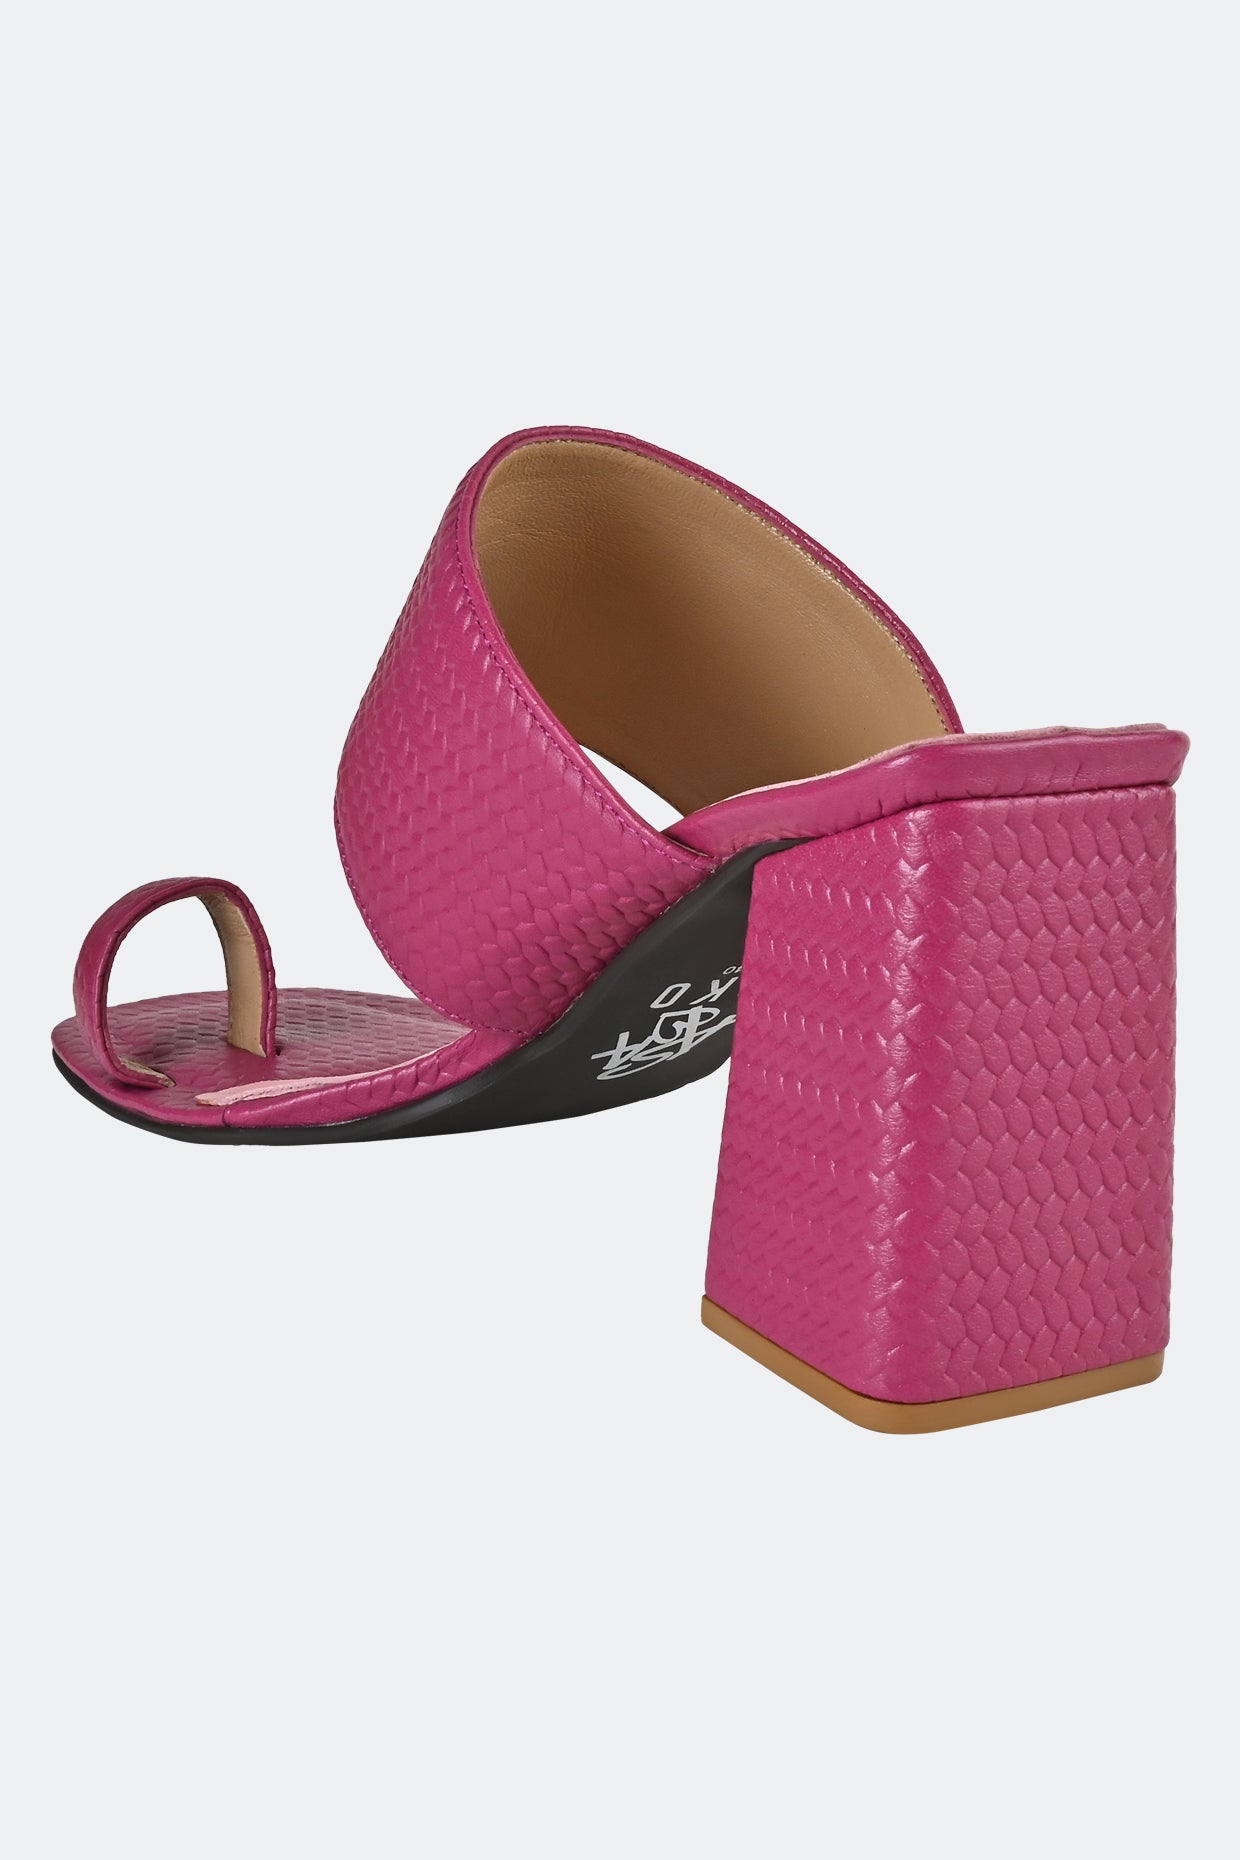 Pink One Toe Heels For Women